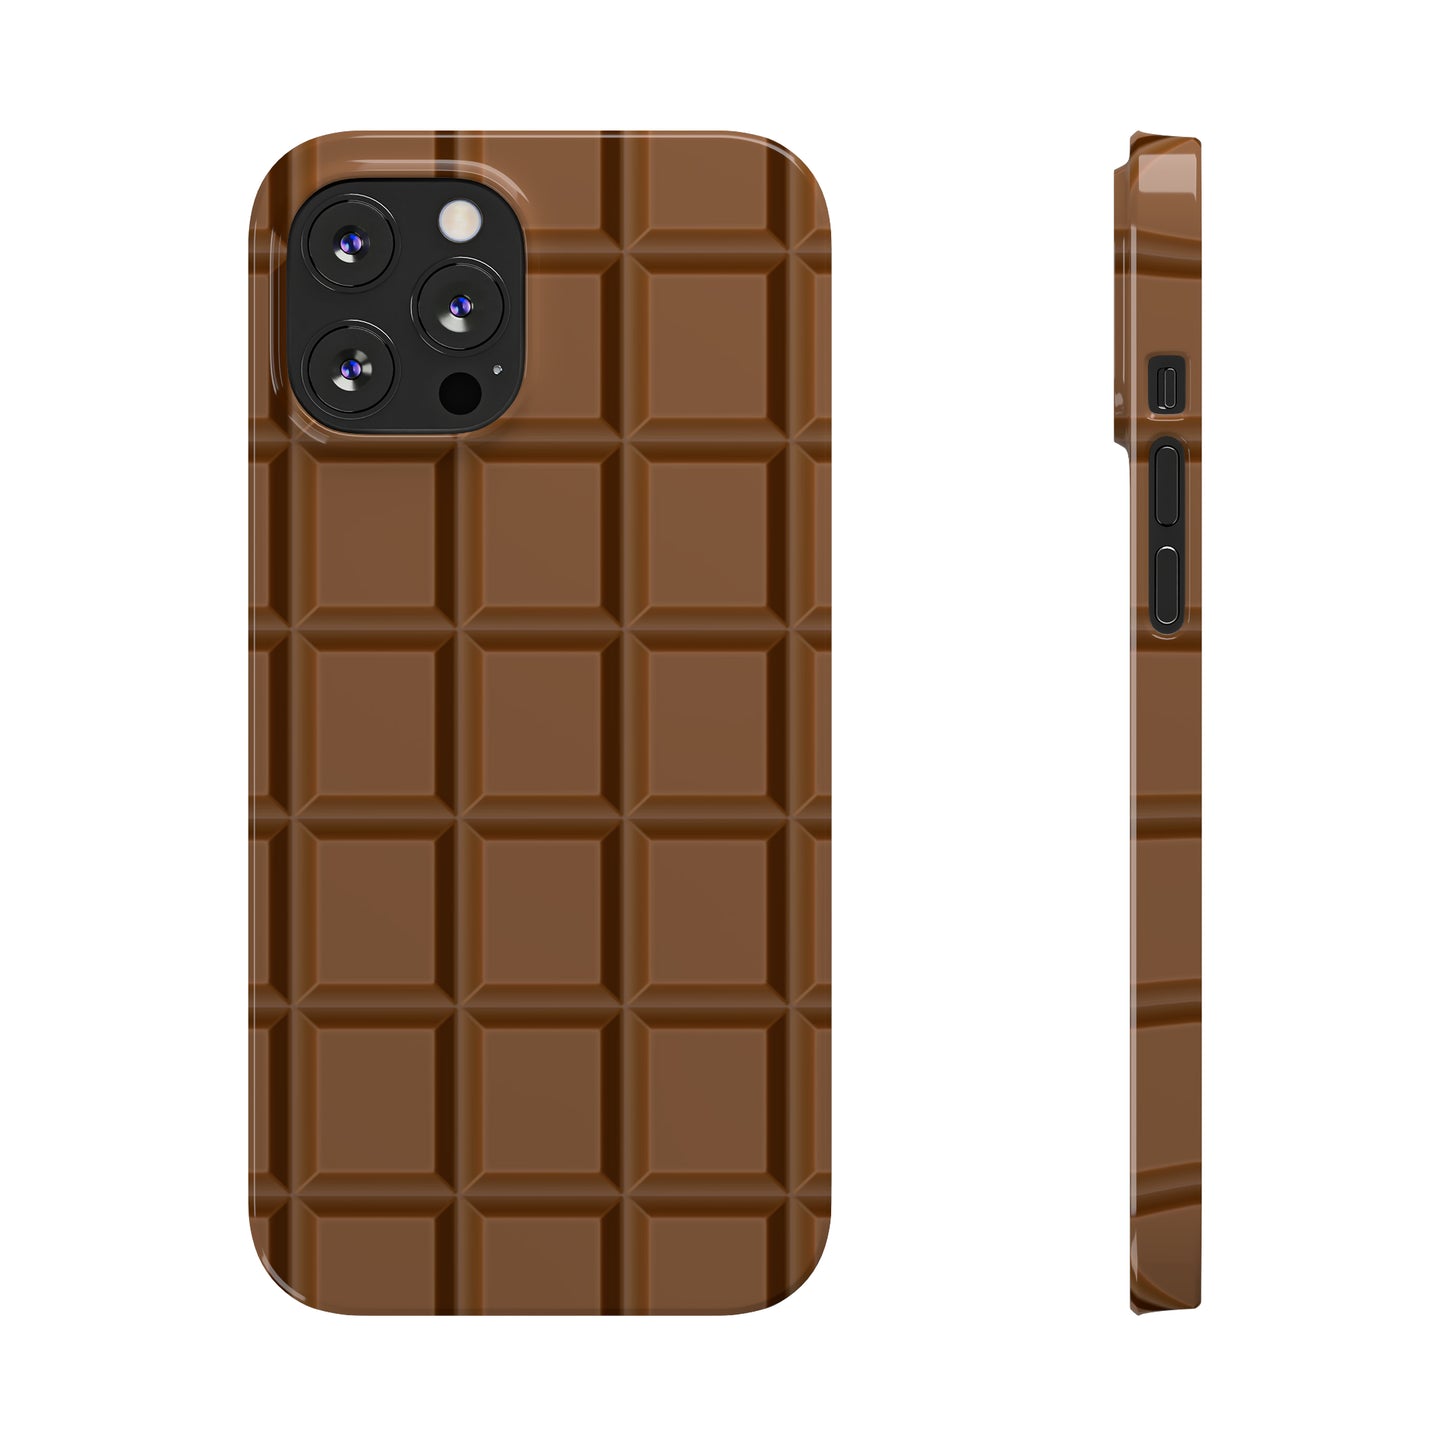 Chocolate Slim Phone Cases